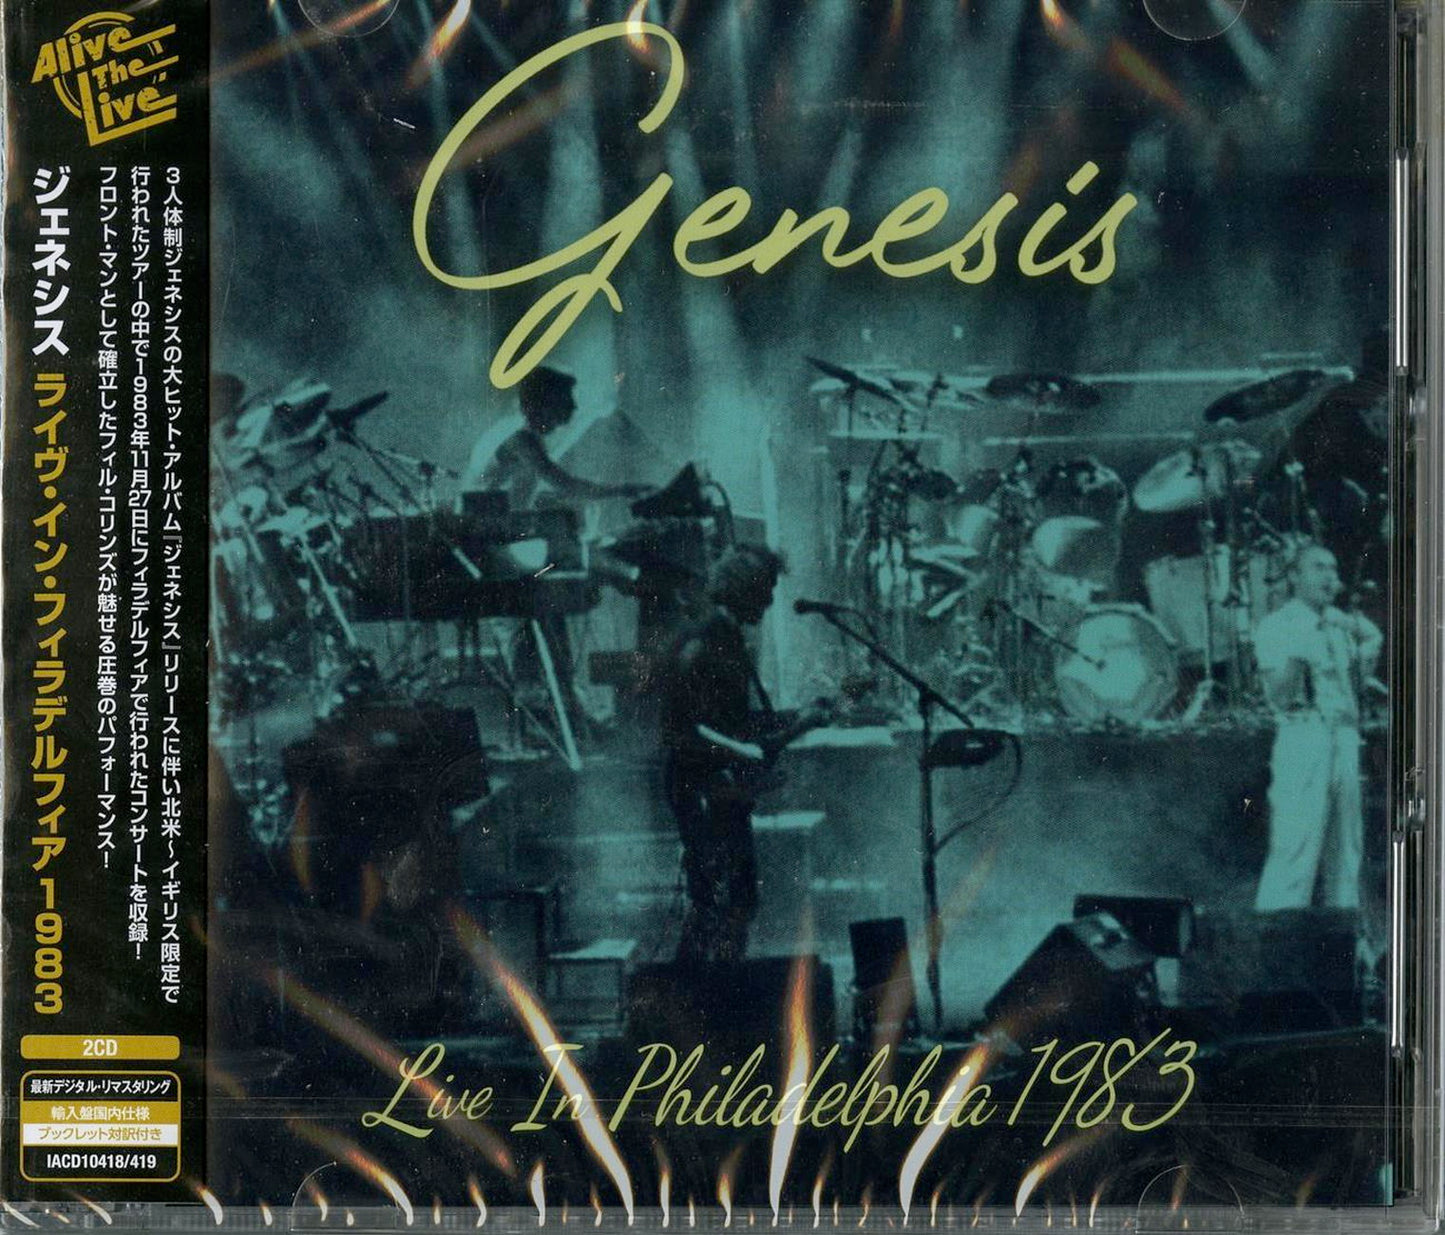 Genesis - Live In Philadelphia 1983 - Import 2 CD